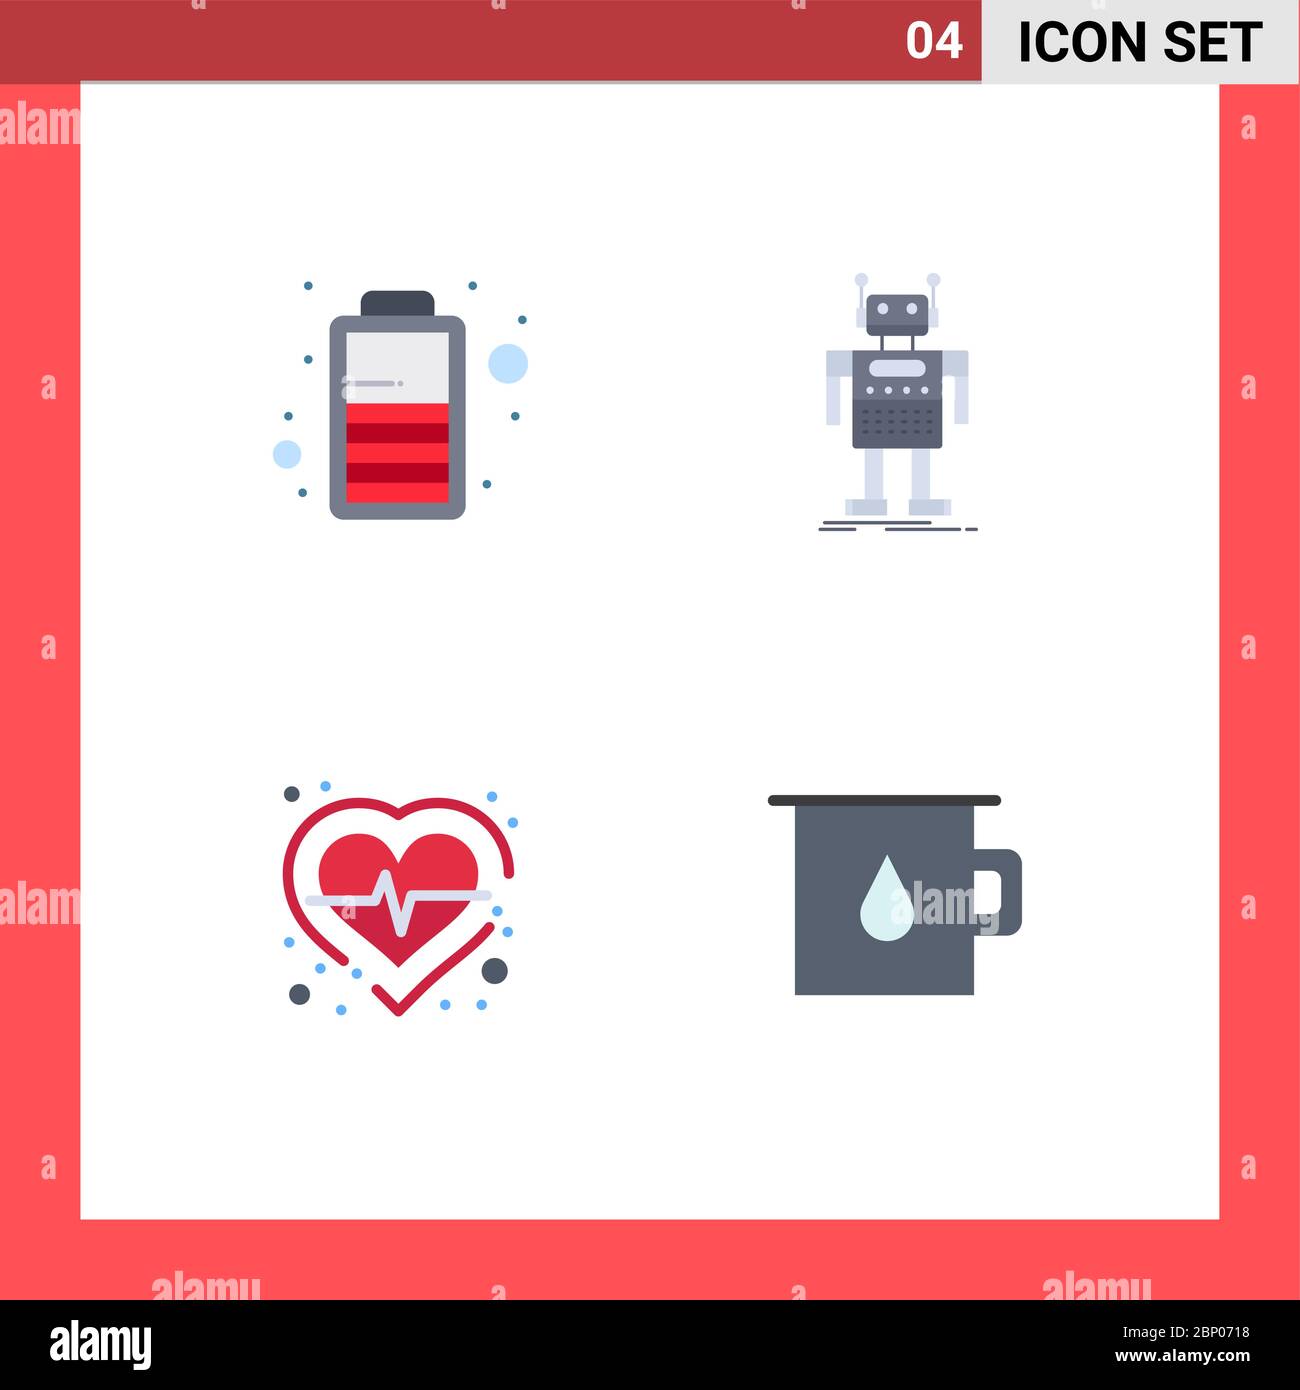 Grupo de 4 iconos planos modernos conjunto de batería, corazón, robot, bot, comprobar elementos de diseño vectorial editables Ilustración del Vector